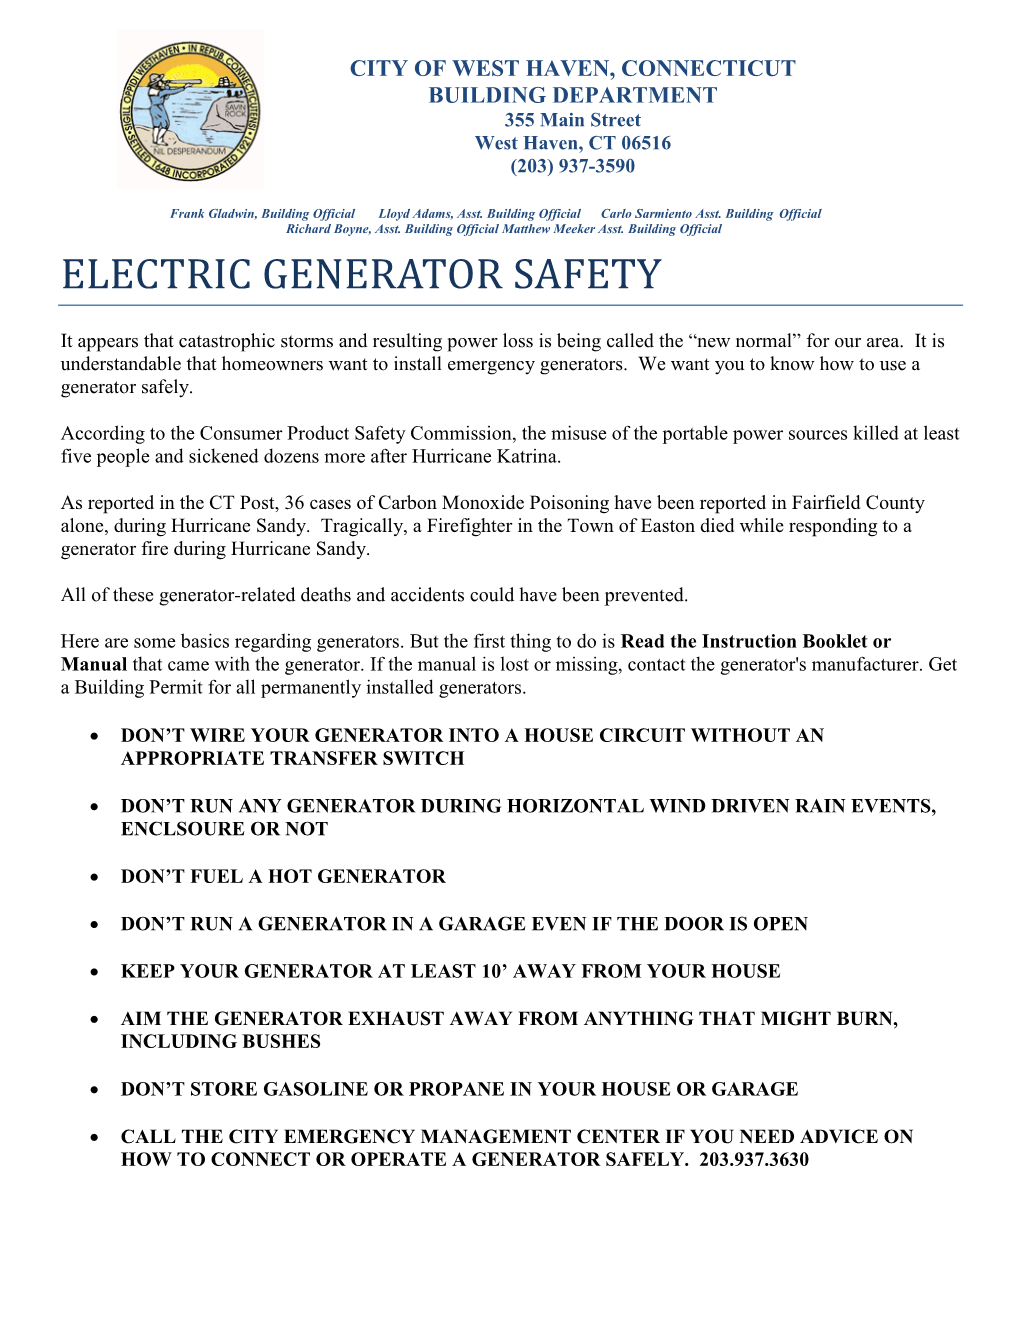 Electric Generator Safety (PDF)